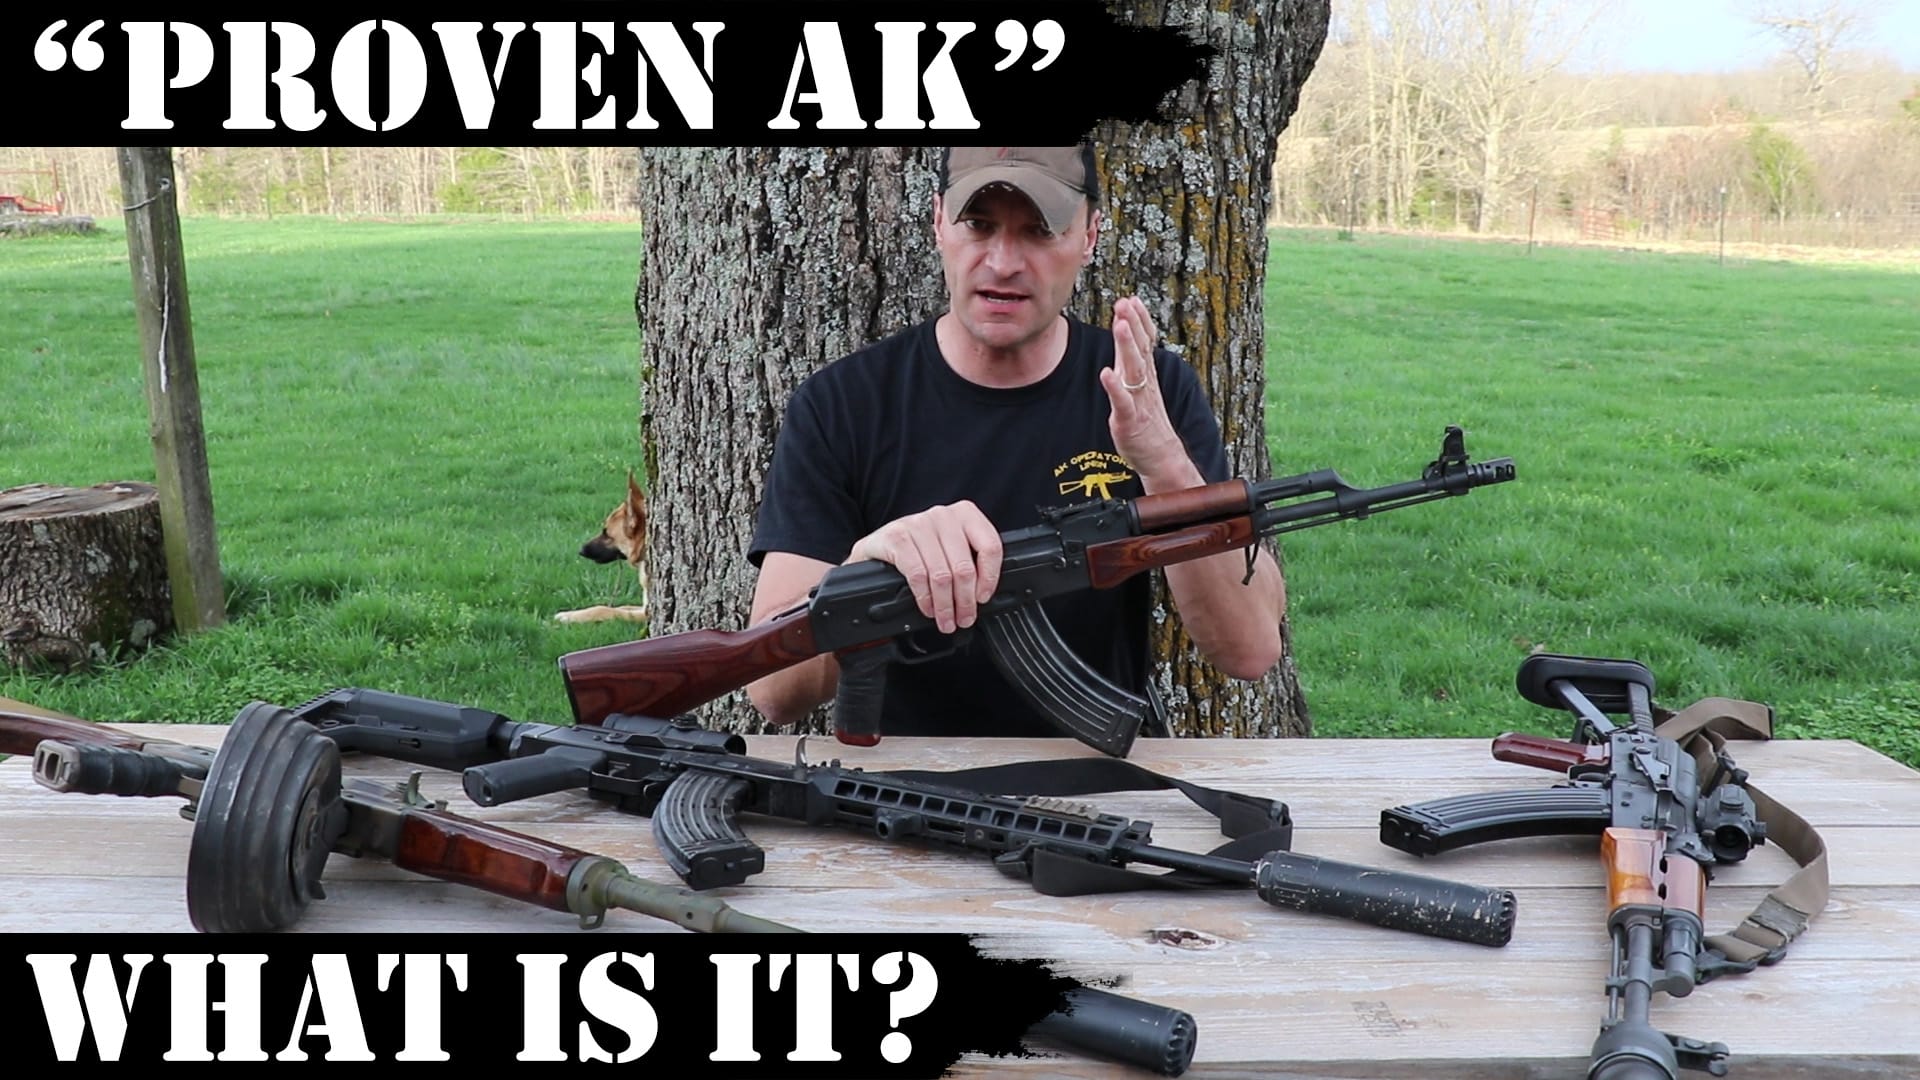 “Proven AK” – What is Proven AK? What makes it “Proven”?